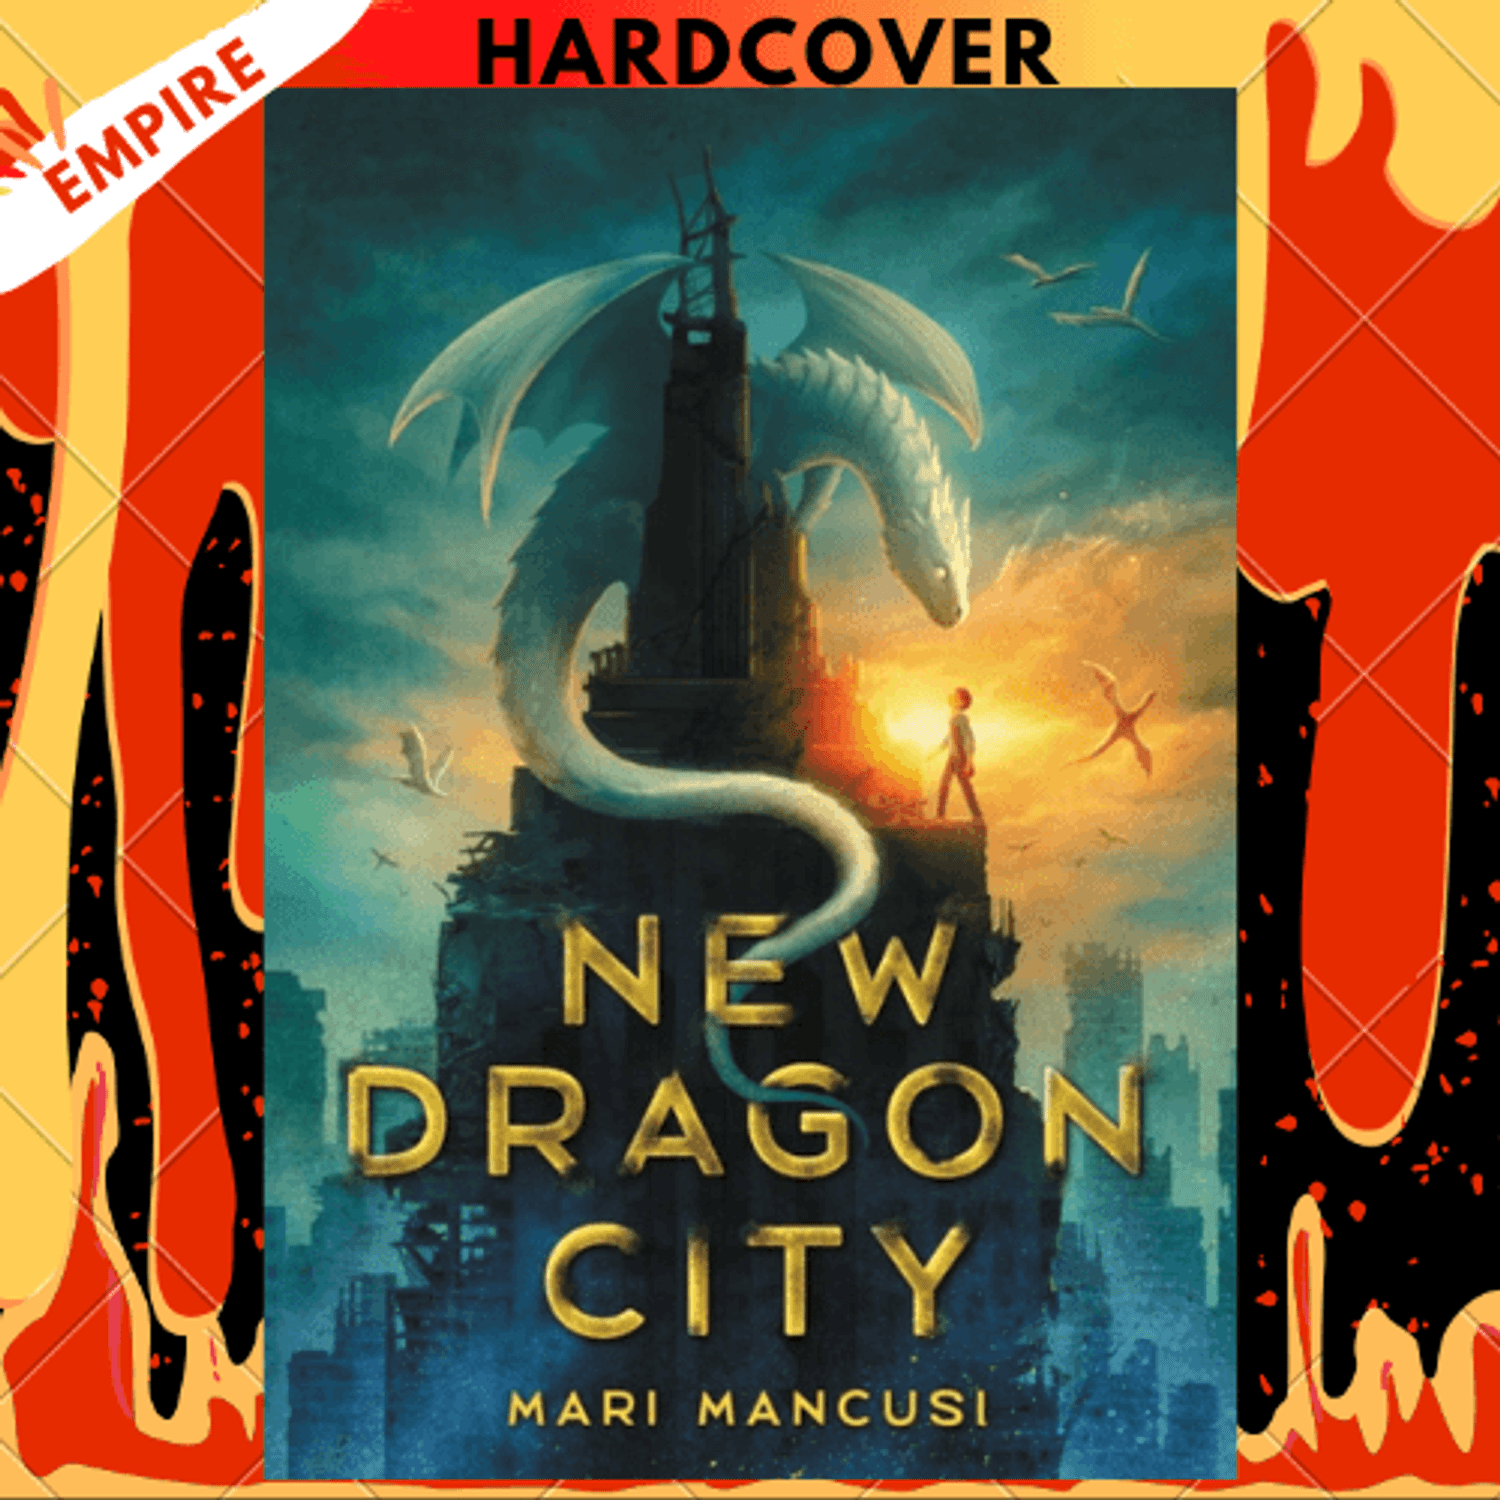 New Dragon City by Mari Mancusi